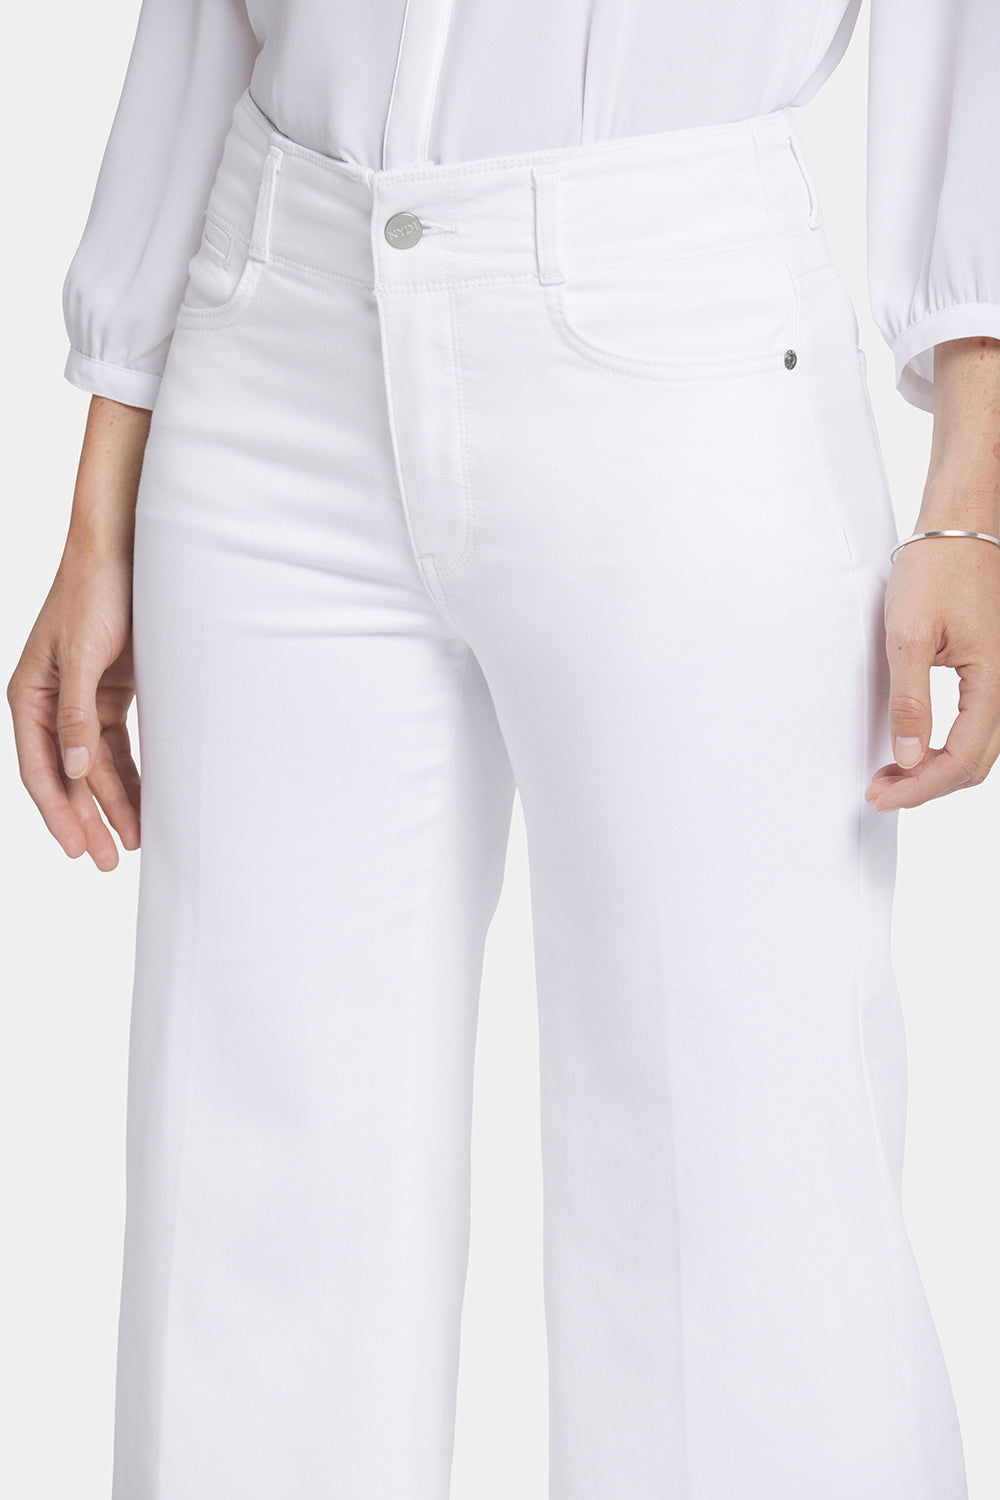 NYDJ Brigitte Wide Leg Capri Jeans With High Rise And Frayed Hems - Optic White